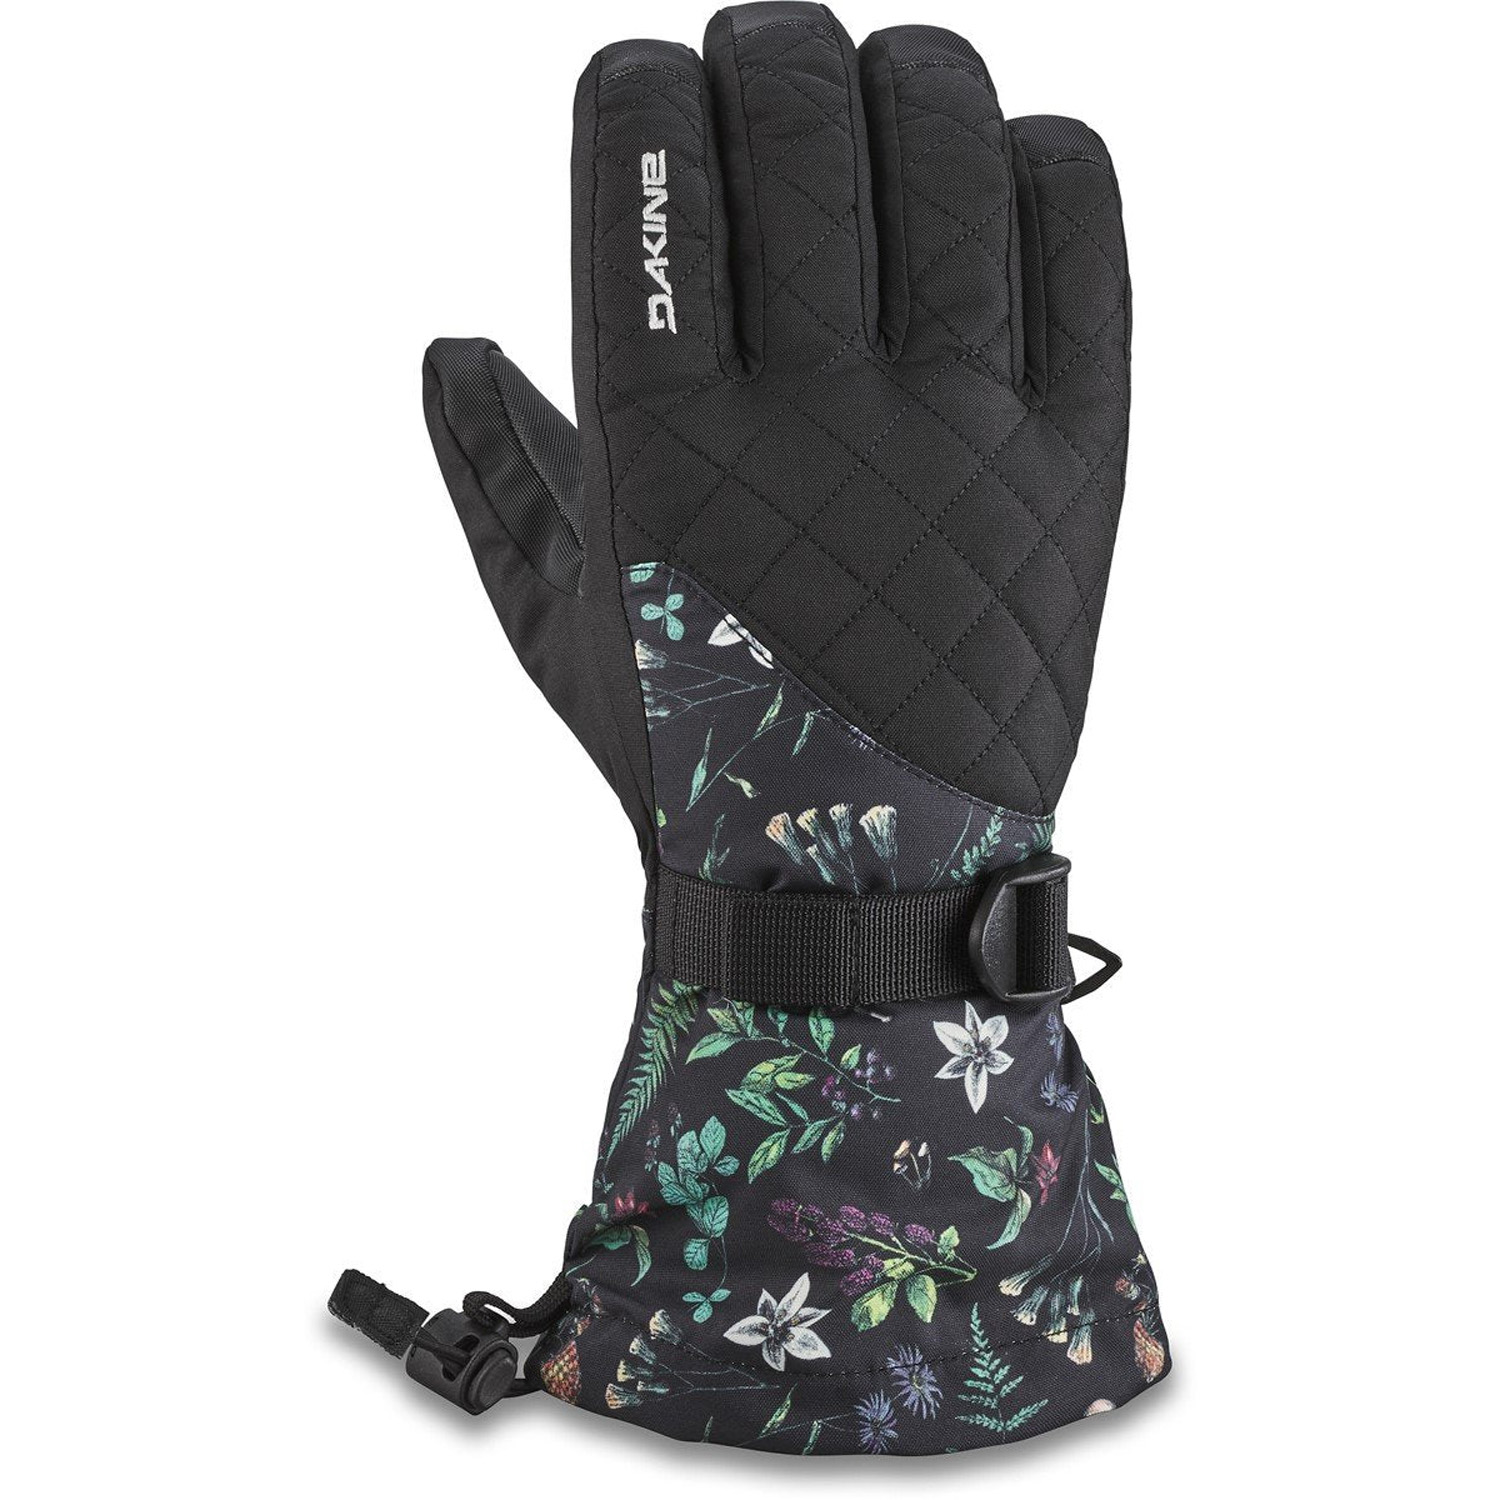 https://www.coastoutdoors.co.uk/images/products/2022-Dakine-Womens-Lynx-Ski-Snowboard-Gloves-Woodland-Floral.jpg